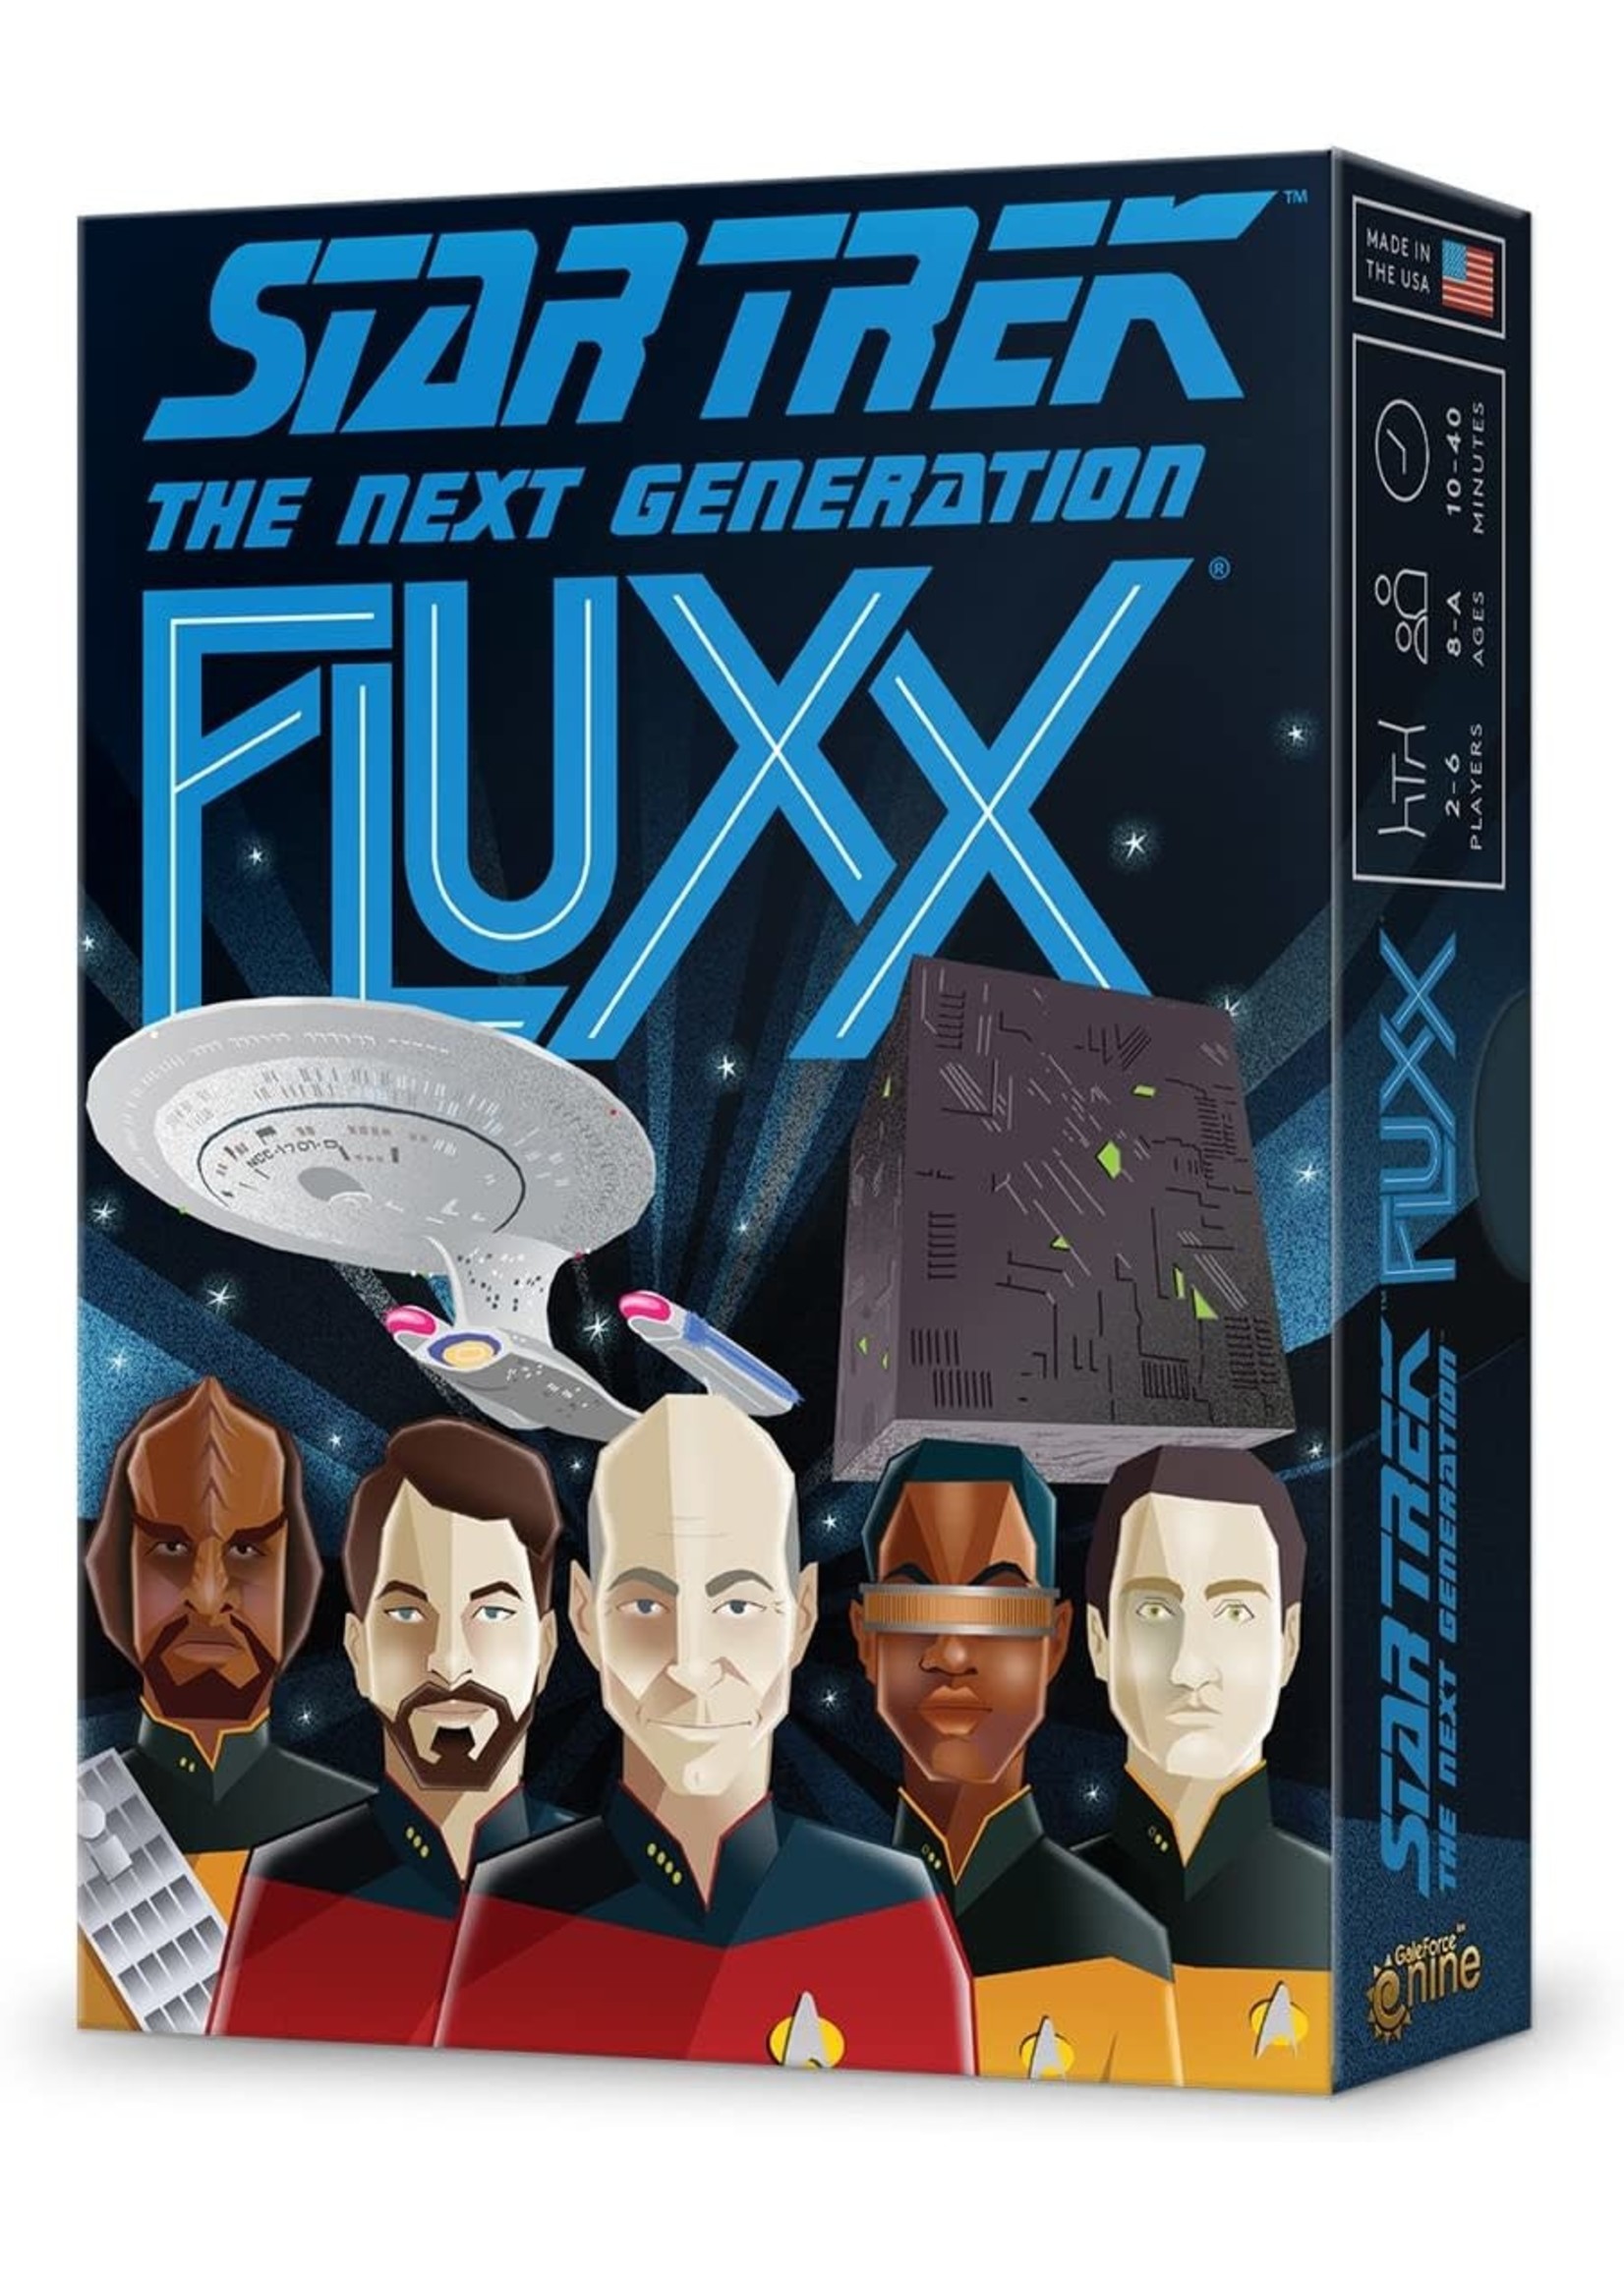 Star Trek Star Trek: The Next Generation Fluxx